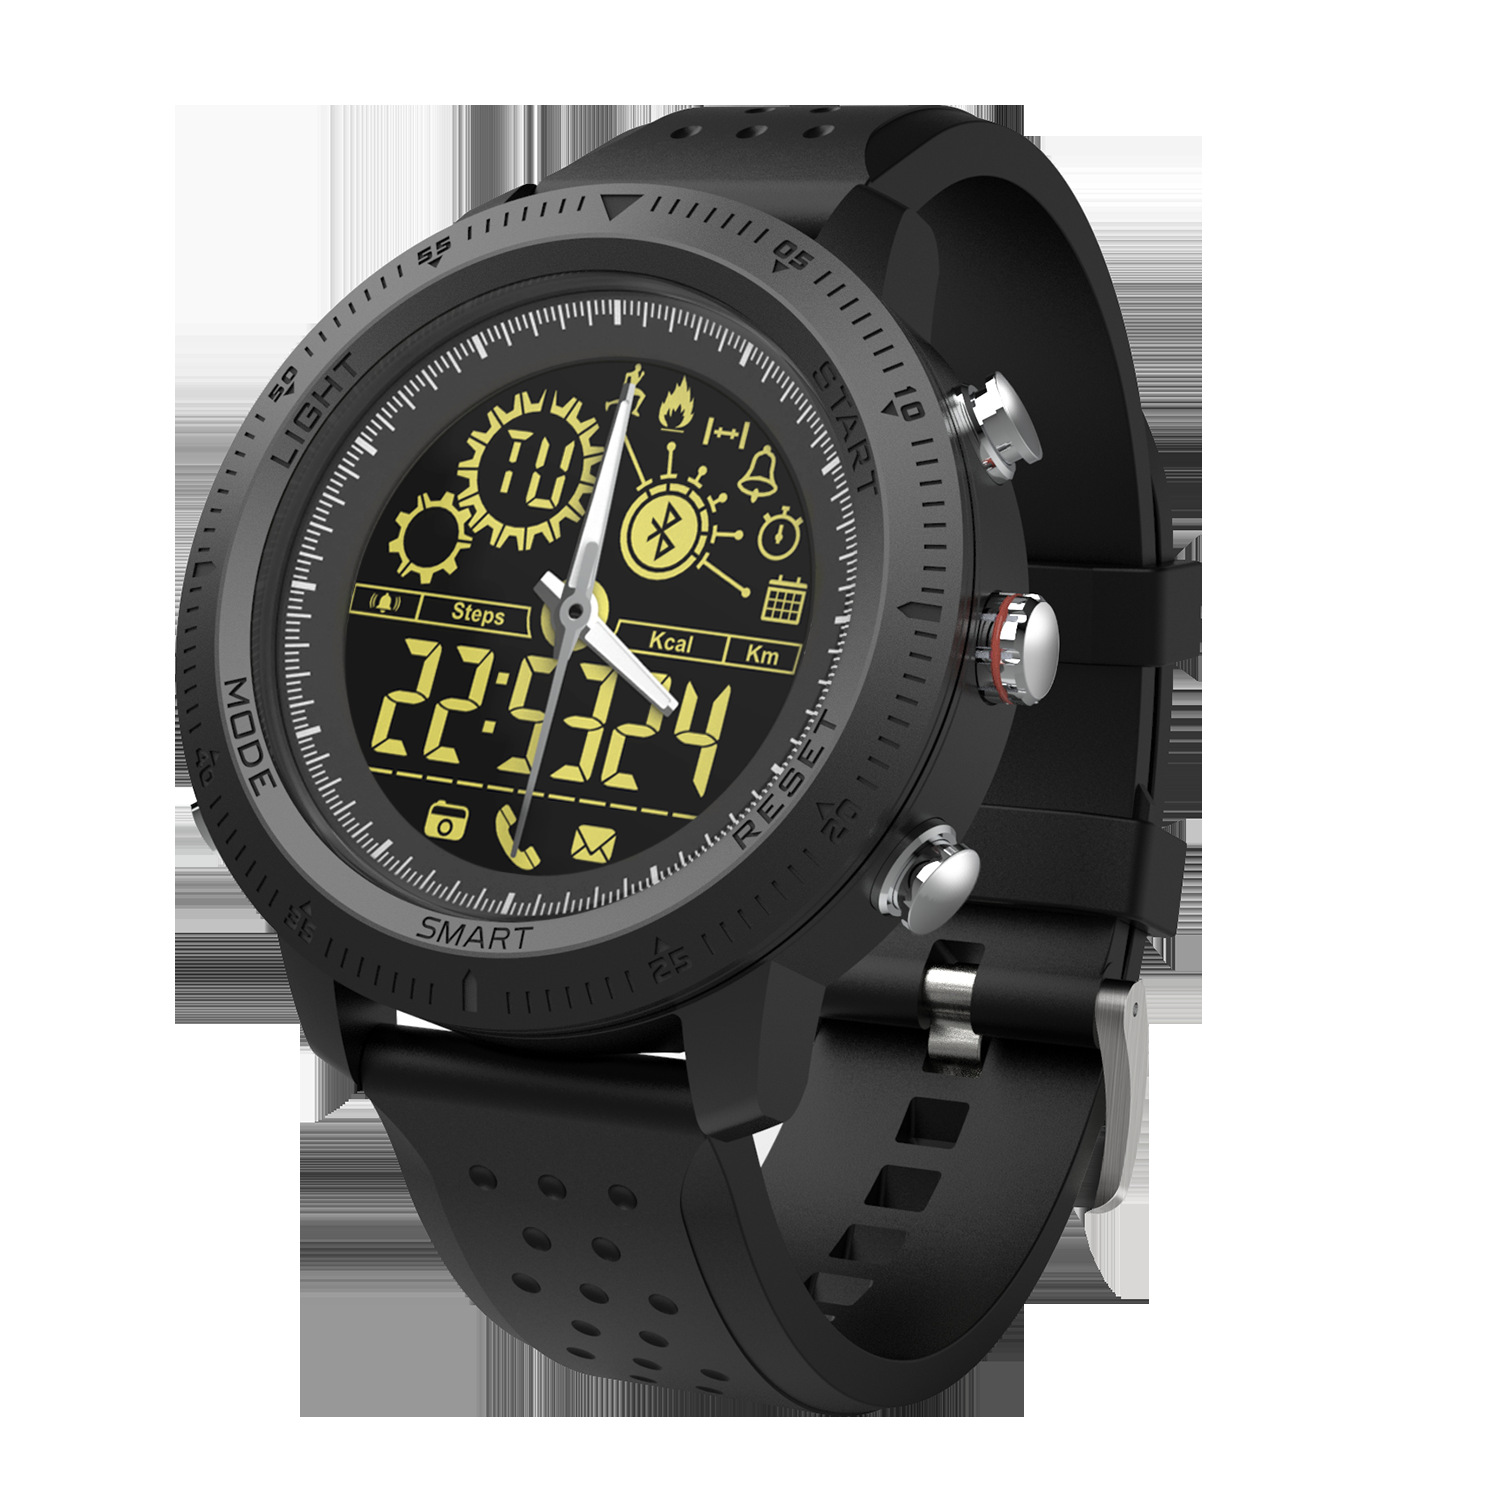 Smart watch - Ref 3392003 Image 1